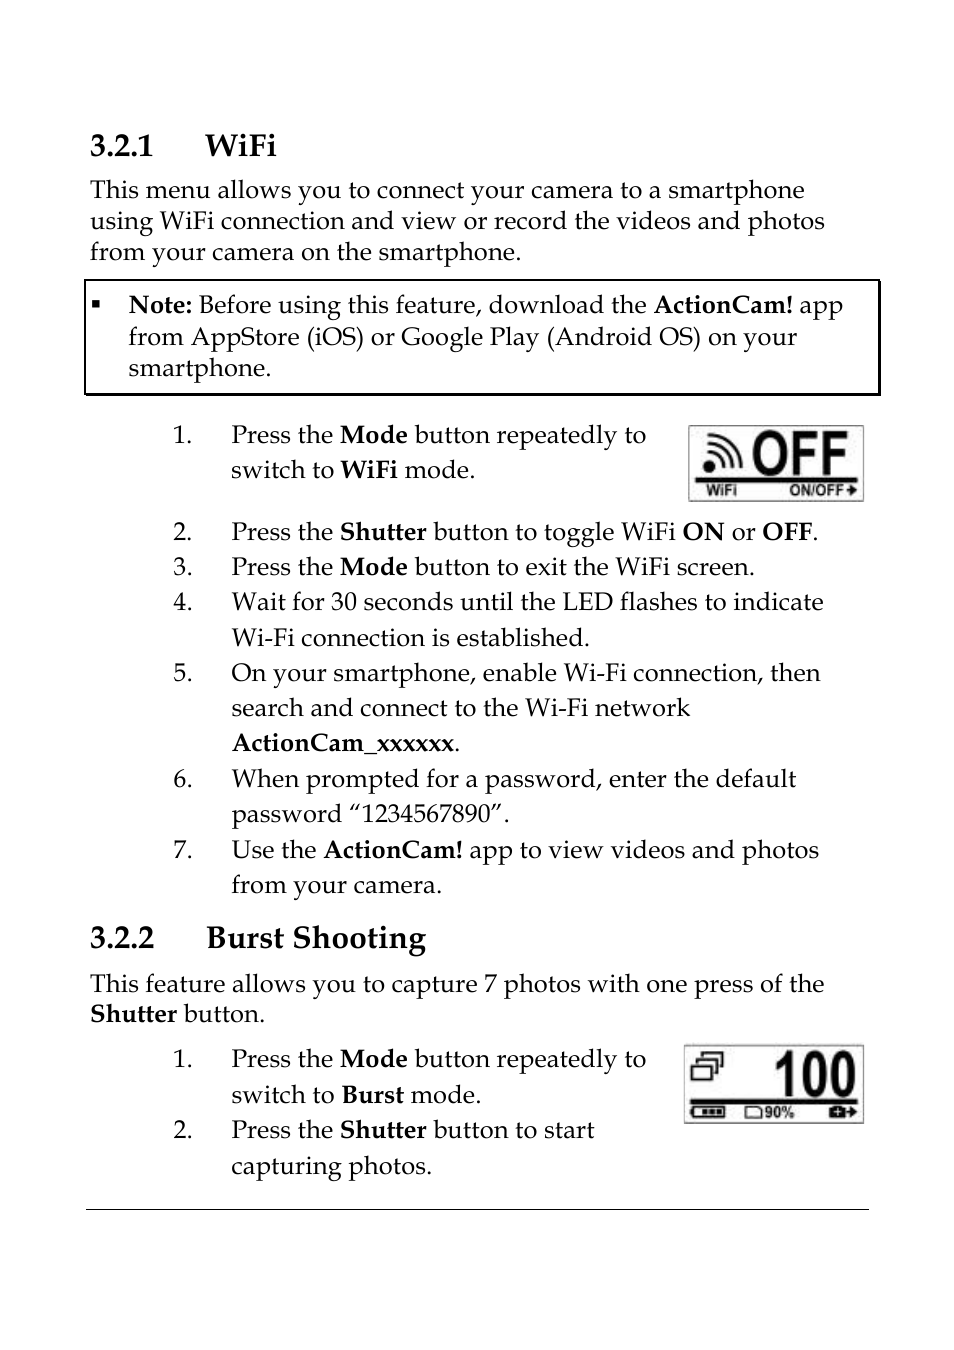 1 wifi, 2 burst shooting | WASPcam GIDEON HD Action Camera User Manual | Page 29 / 69